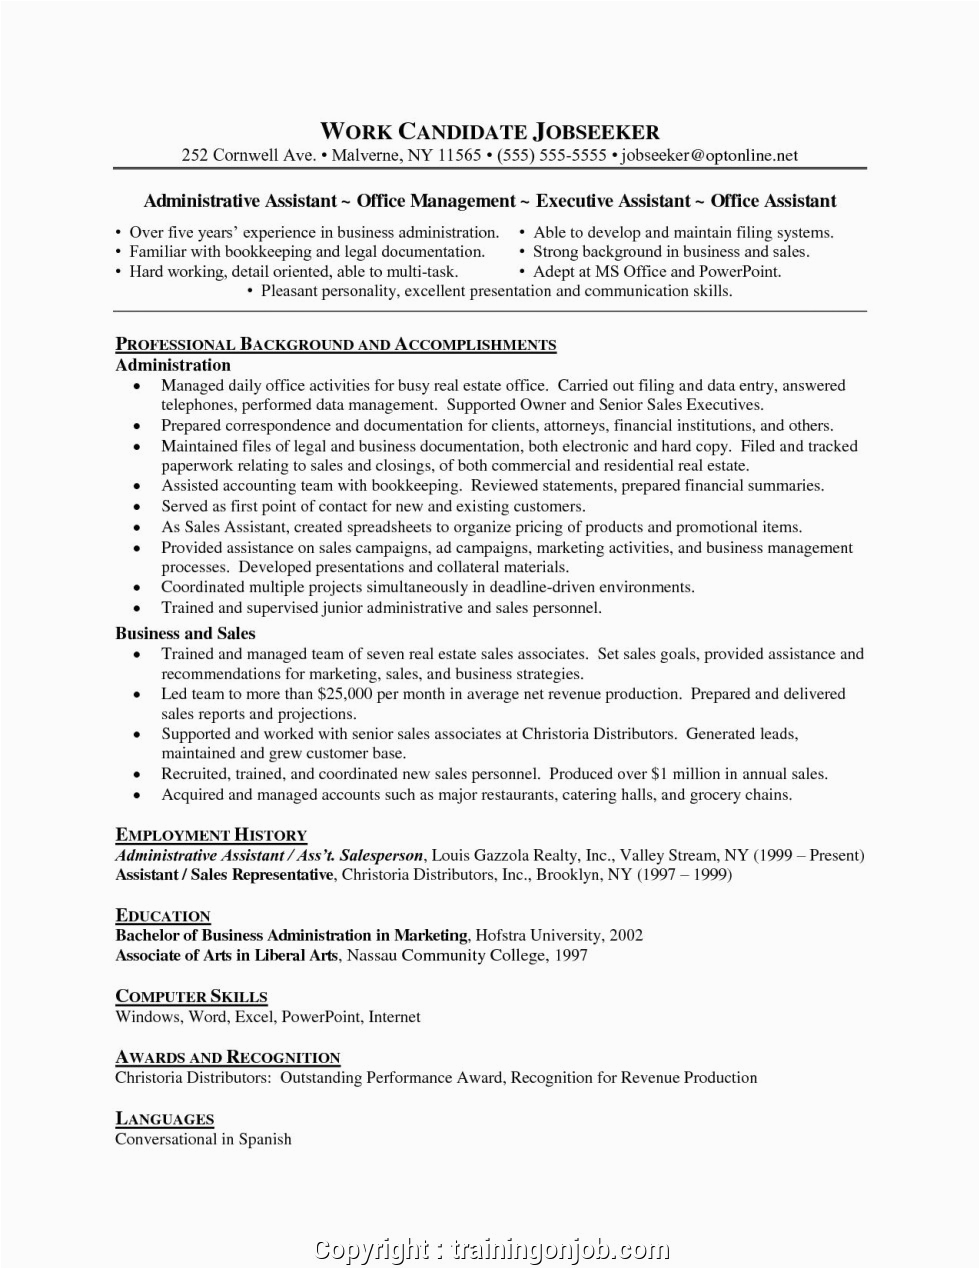 Resume Sample for Business Administration Graduate Simply Business Administration Resume Template Resume